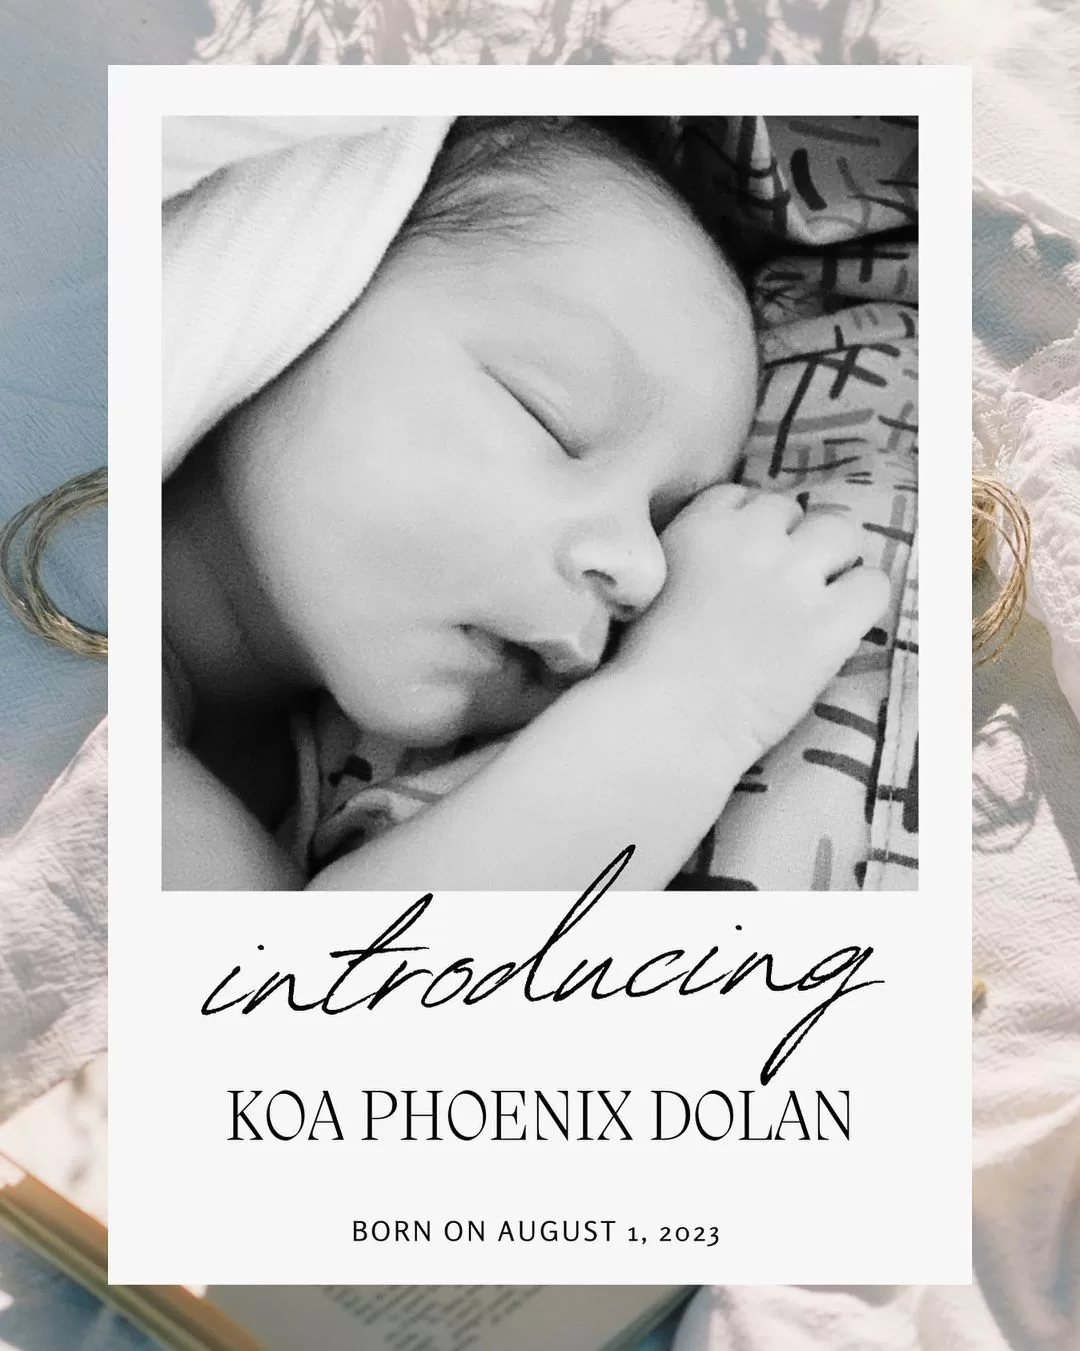 The Birth of Koa Pheonix Dolan, Son of Ileana D'Cruz